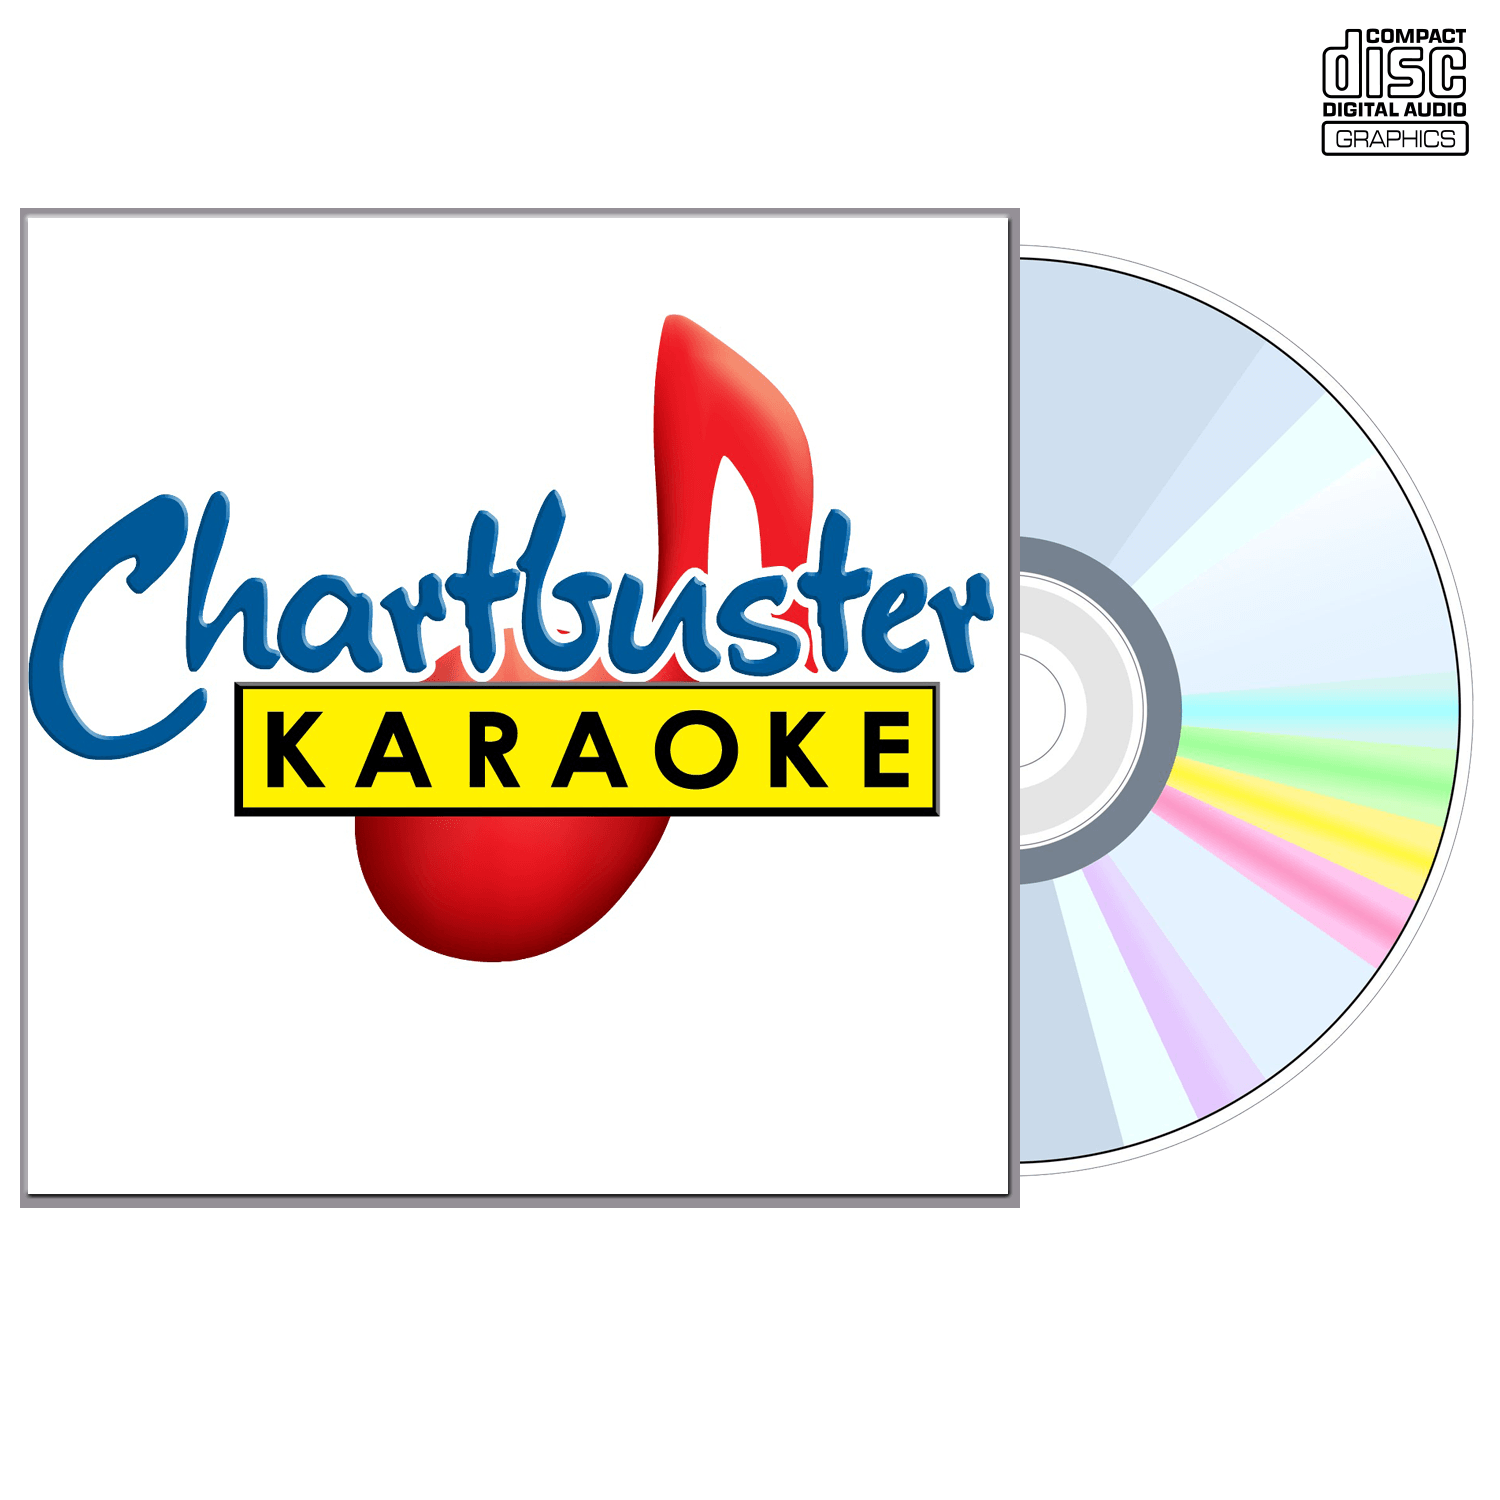 70's Collection Vol 15 - CD+G - Chartbuster Karaoke - Karaoke Home Entertainment